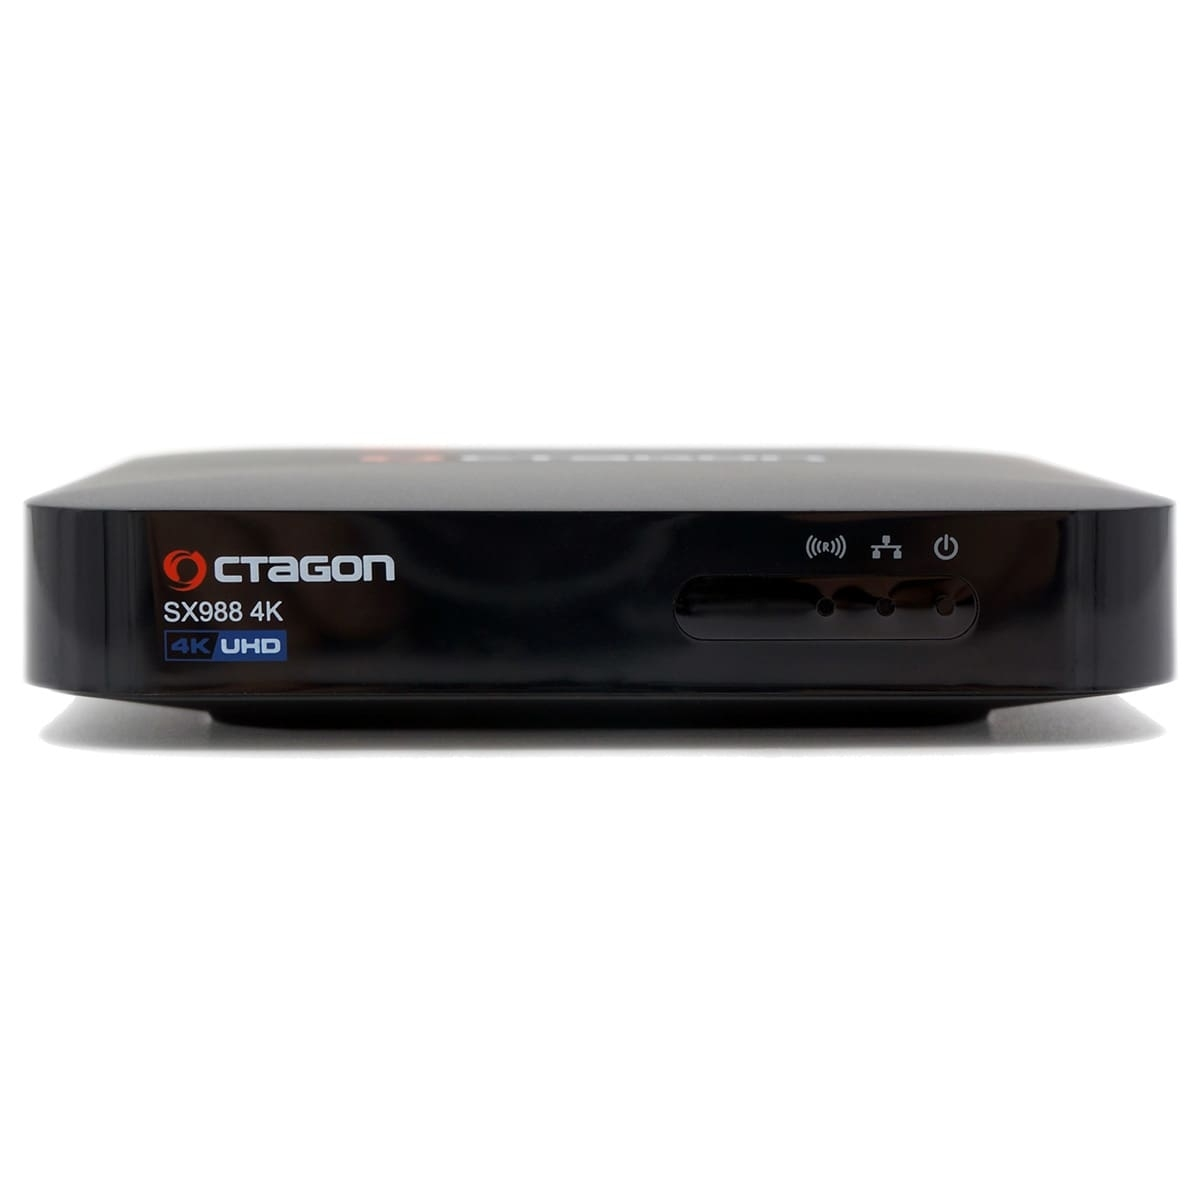 OCTAGON GB Mbit/s SX988 8 300 IP Wifi